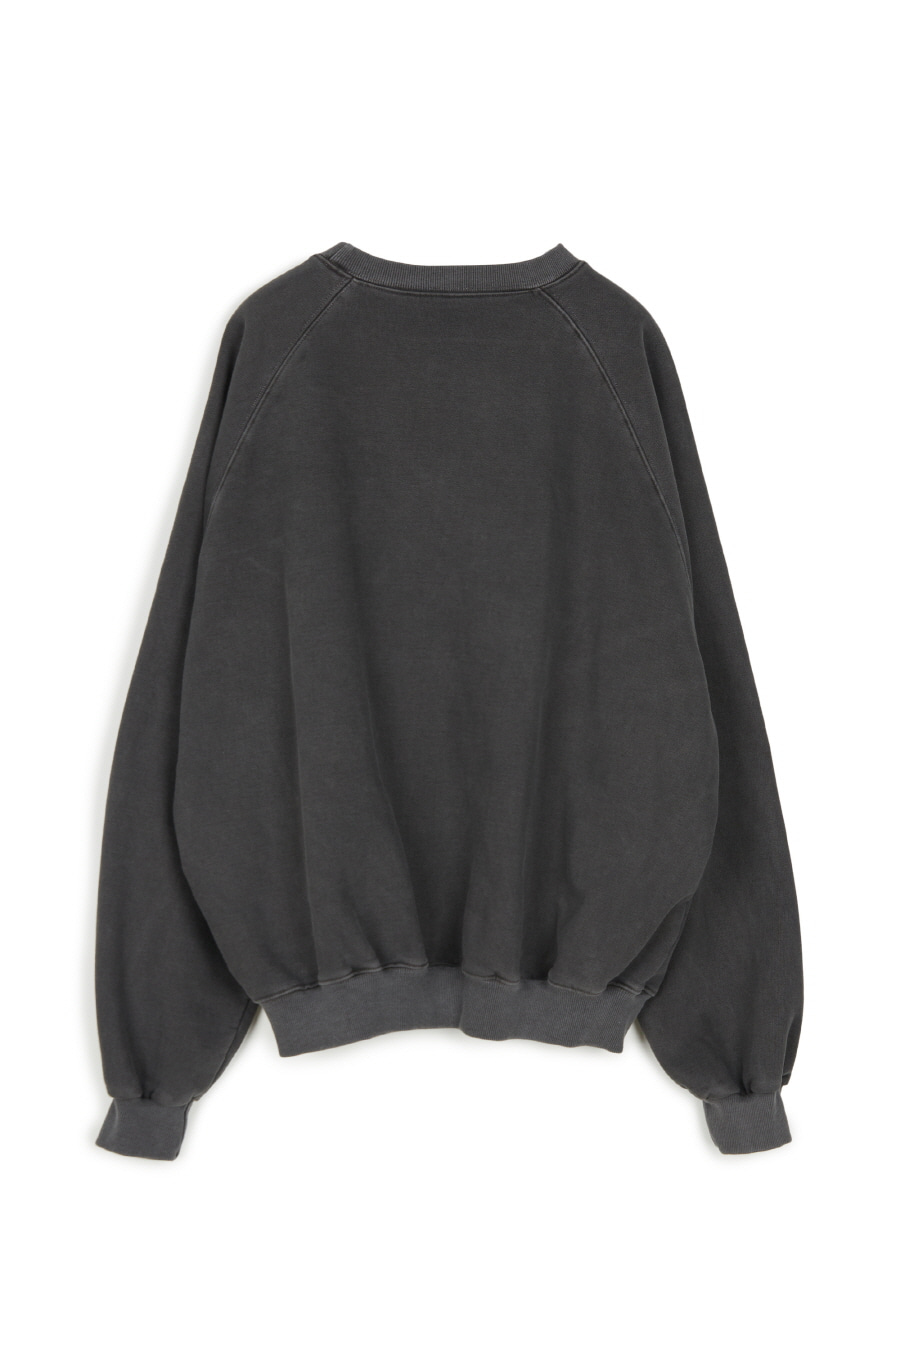 3D Spiritual Girl Artwork Heavy Weight Fleece Raglan Sweatshirt - Dead Black